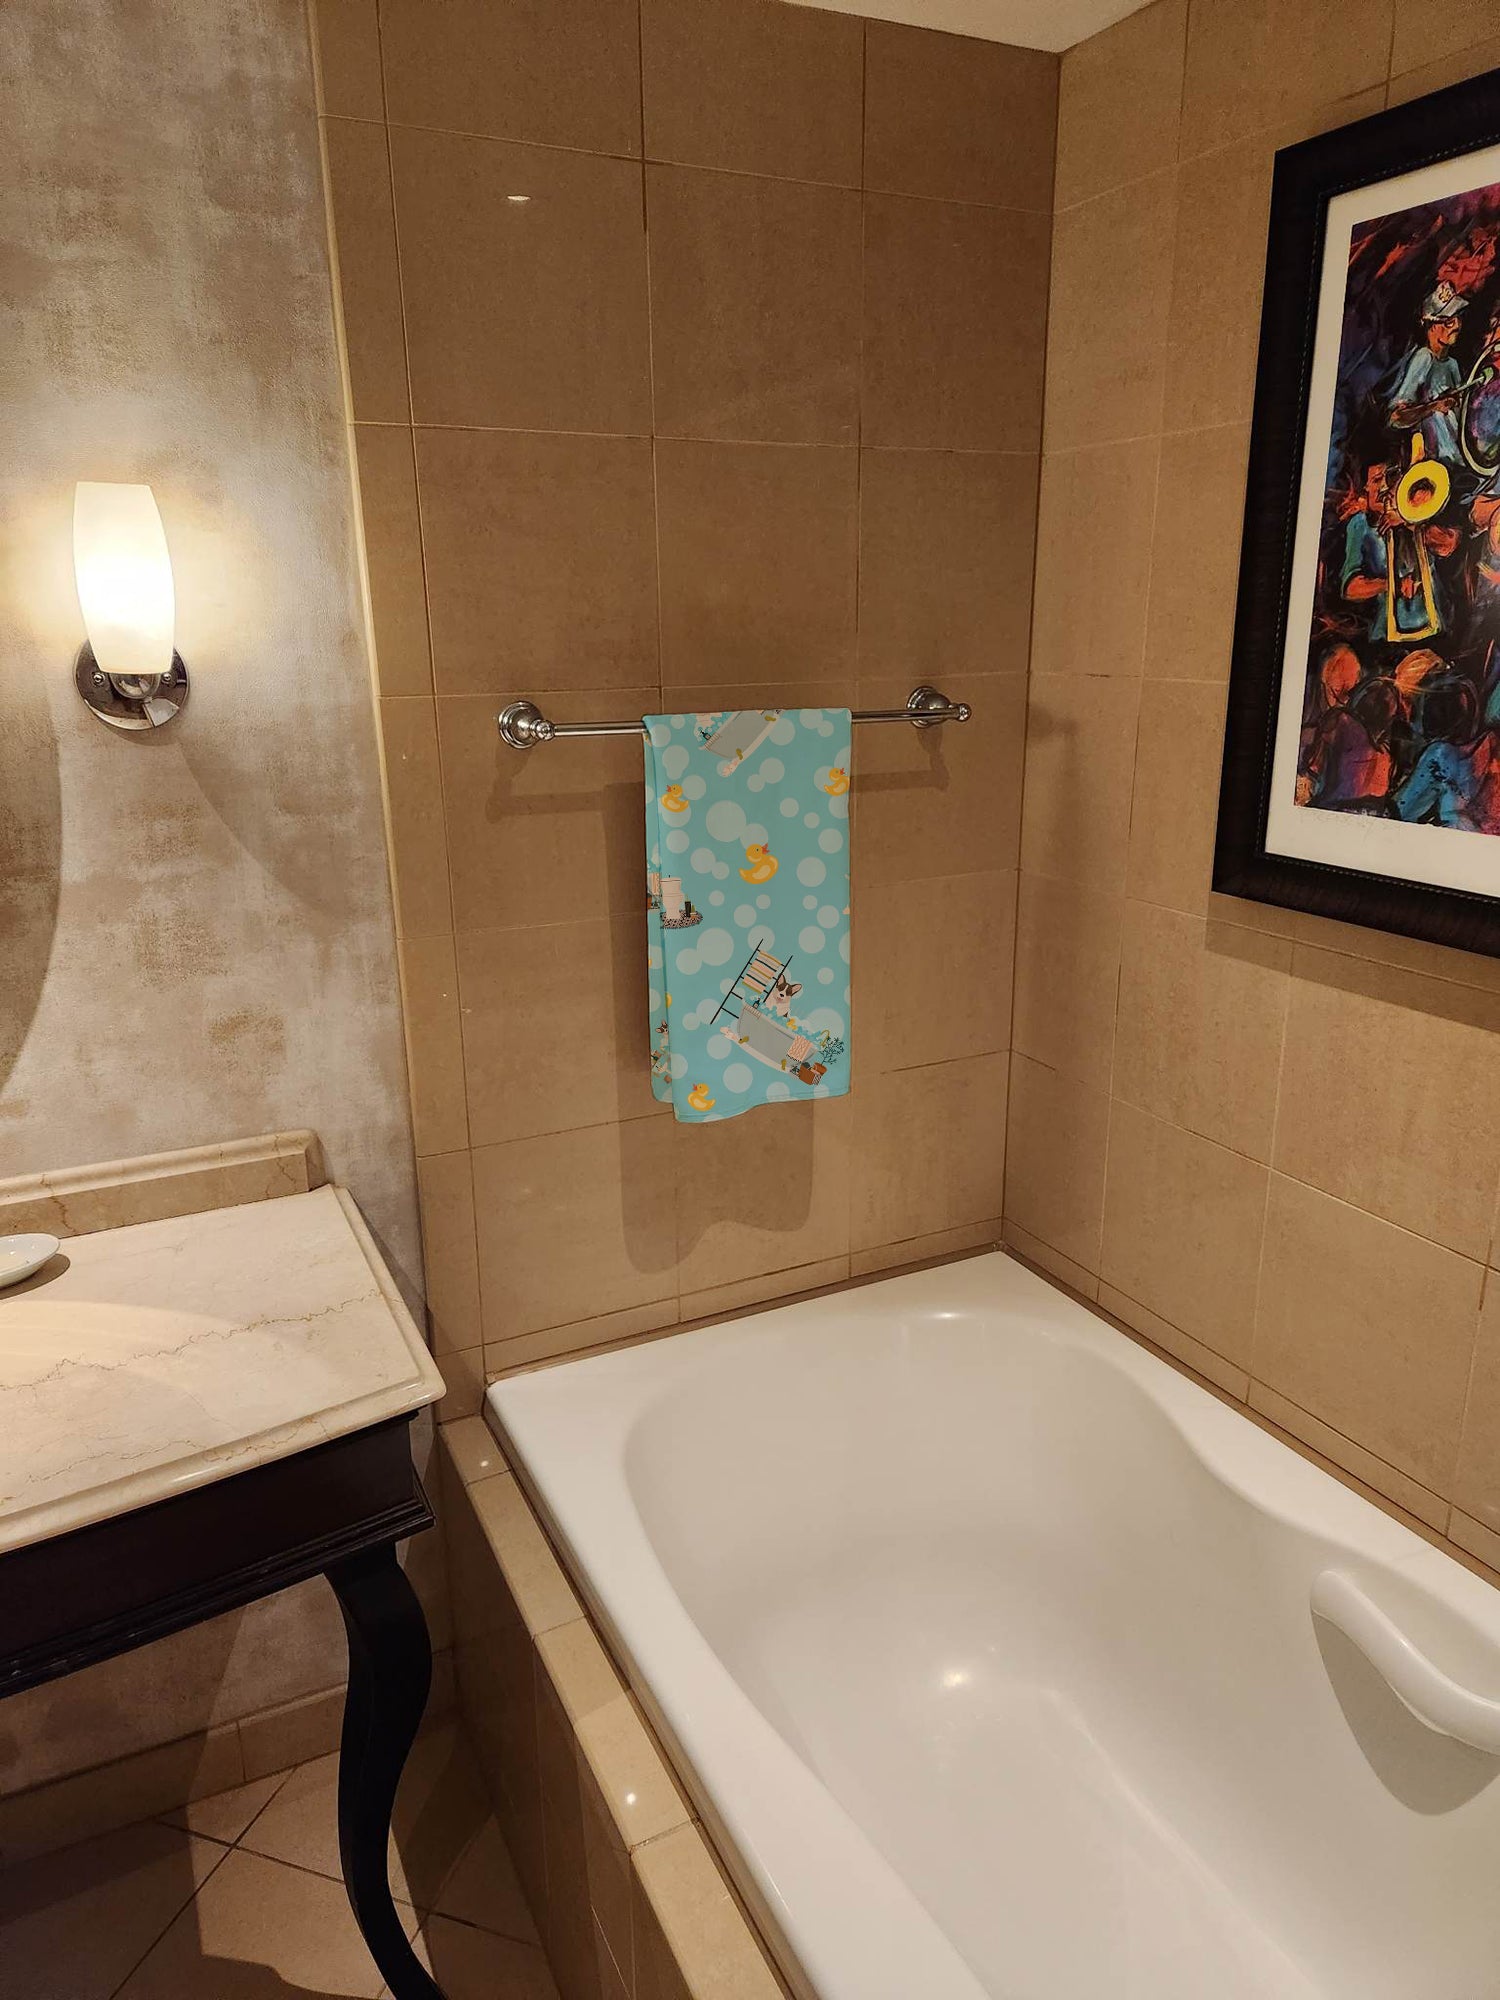 Buy this Brindle Cardigan Corgi Bath Towel Large